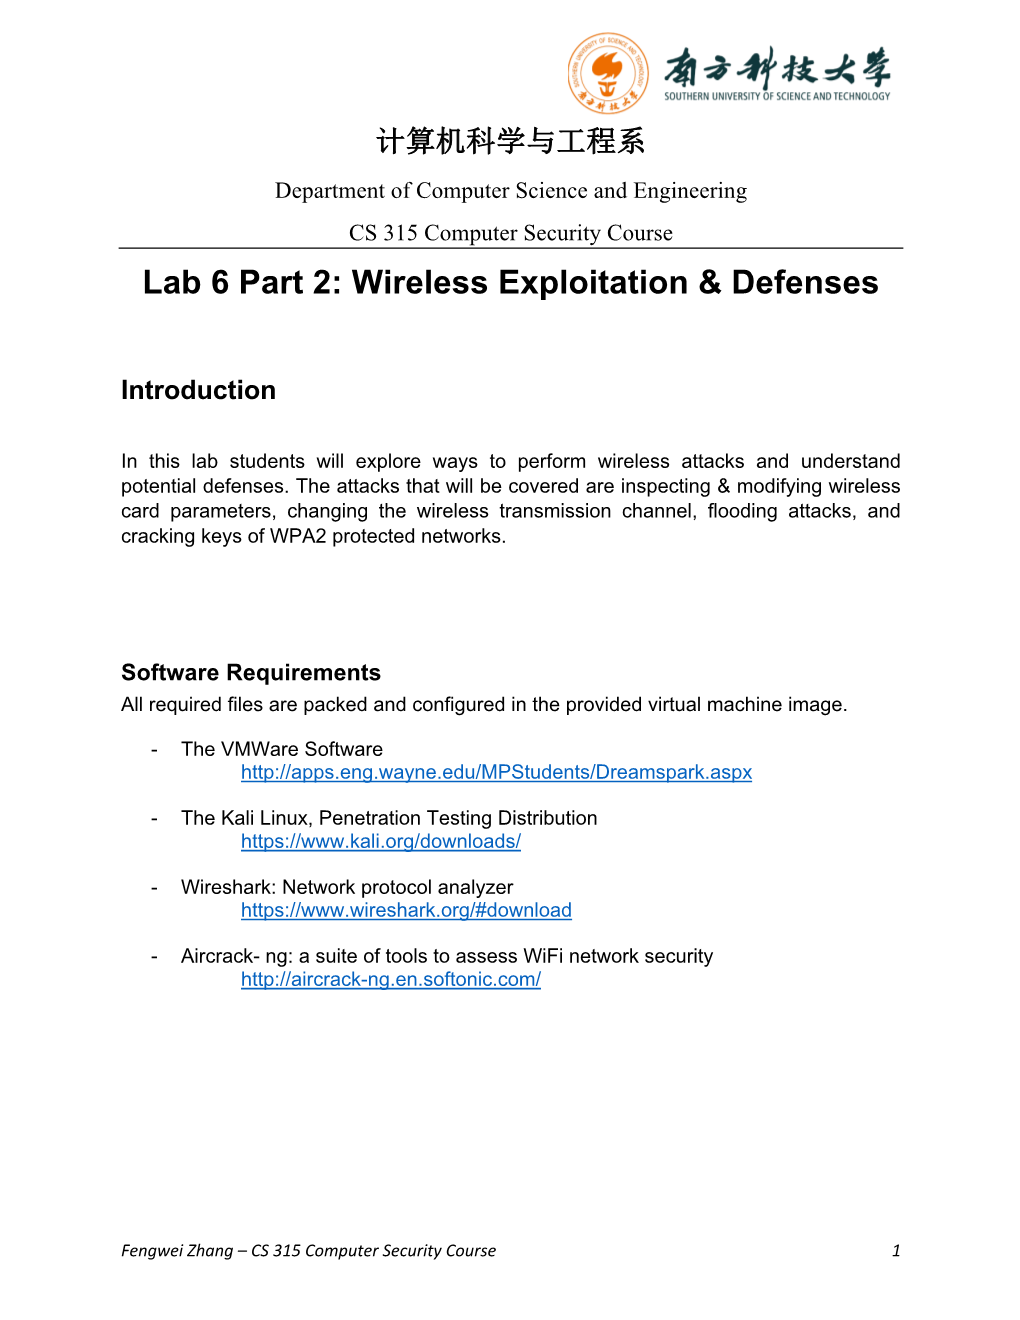 Lab 6 Part 2: Wireless Exploitation & Defenses